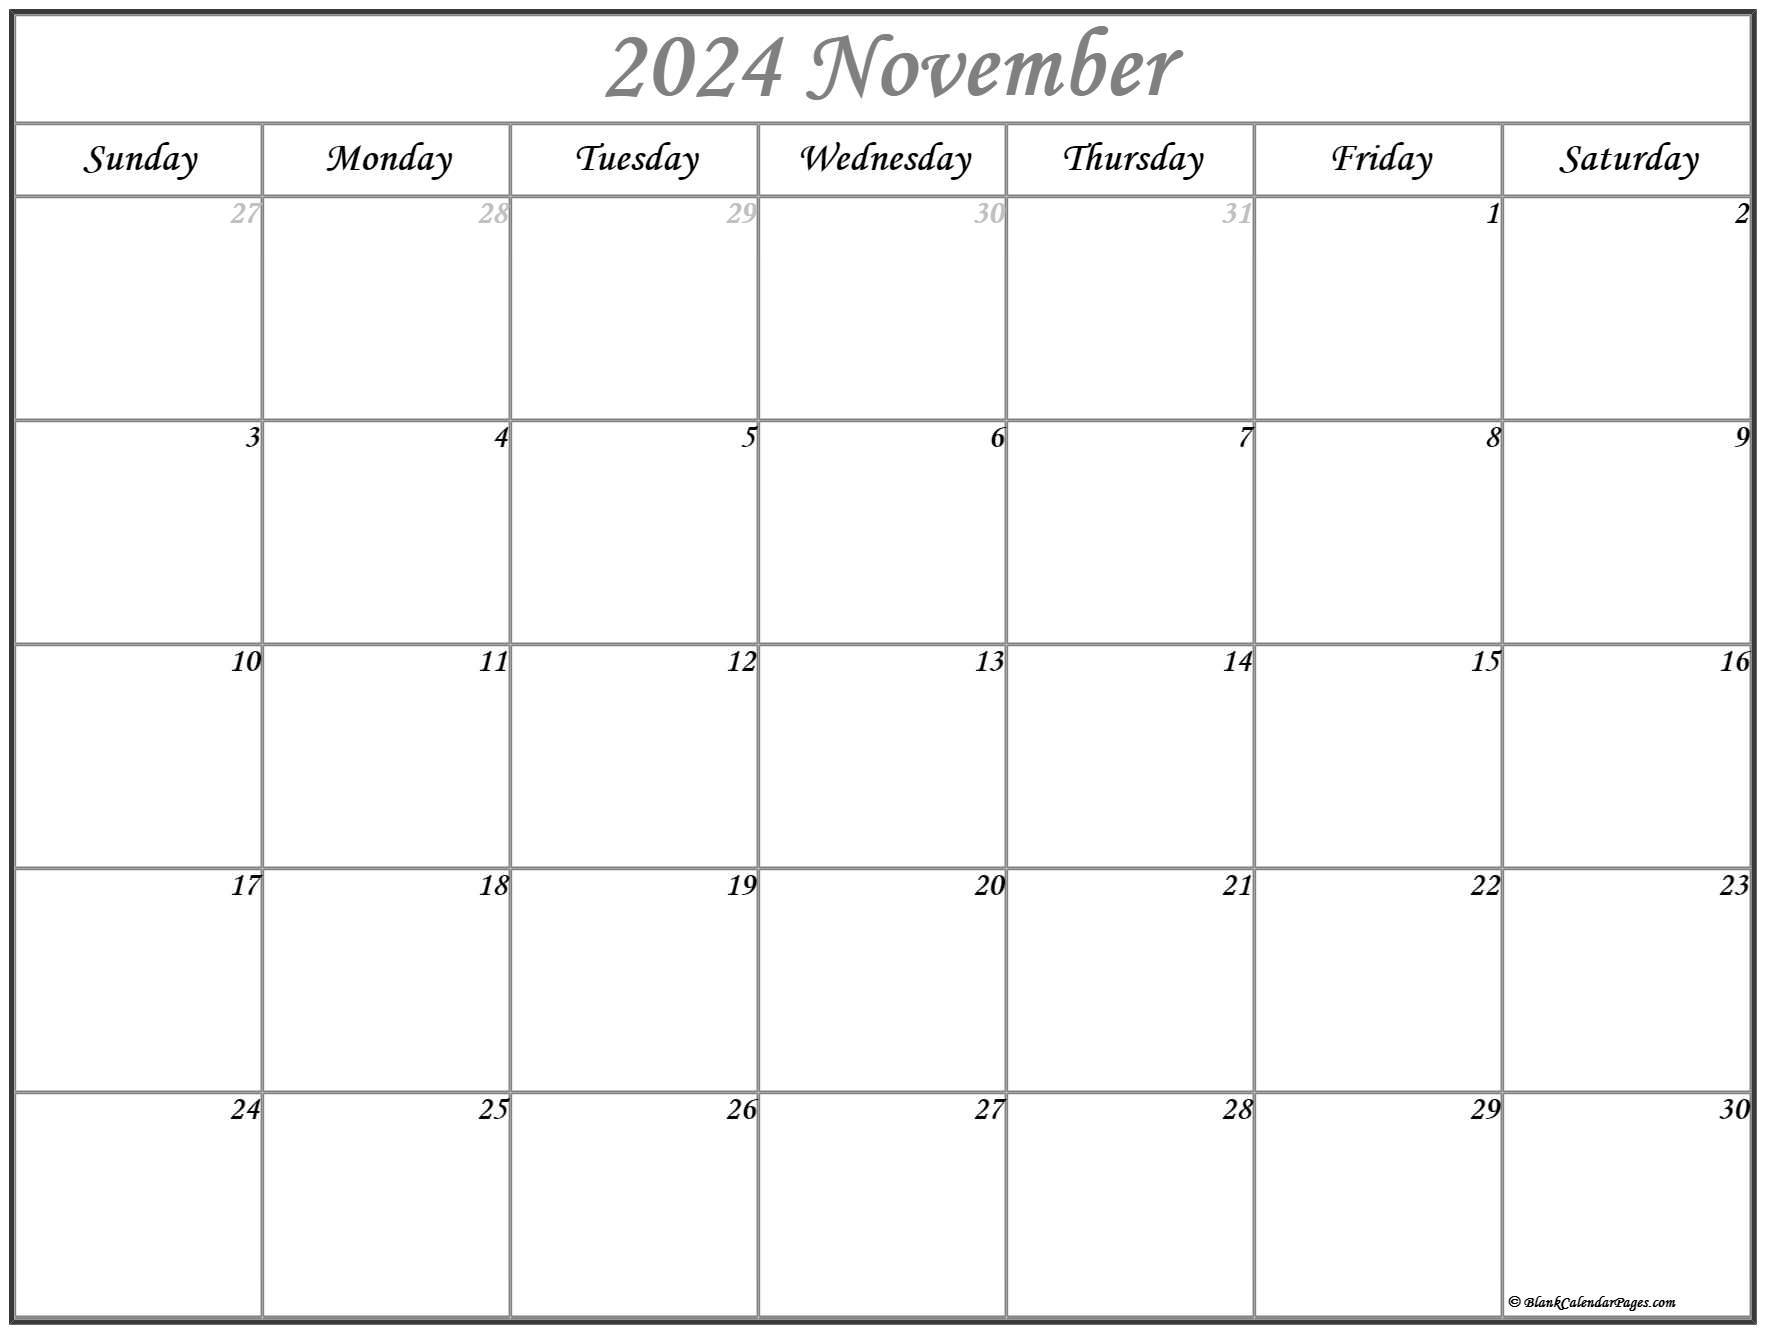 November 2021 calendar | free printable monthly calendars